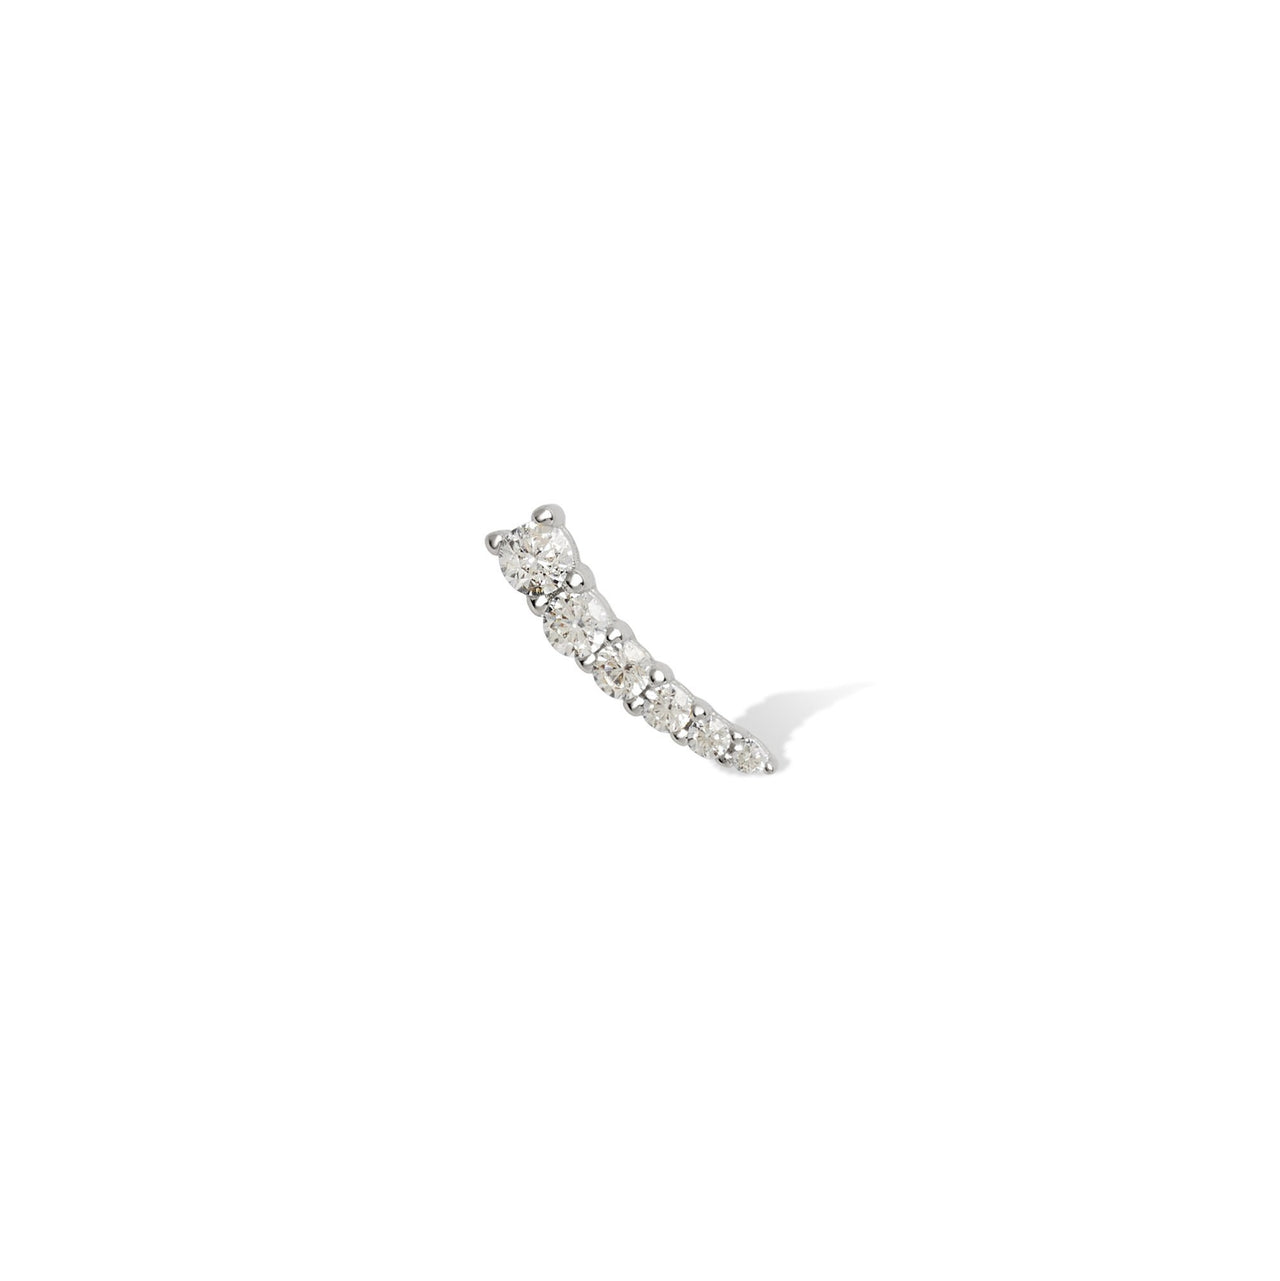 Single earring Croissant sterling silver stud (ball screw)